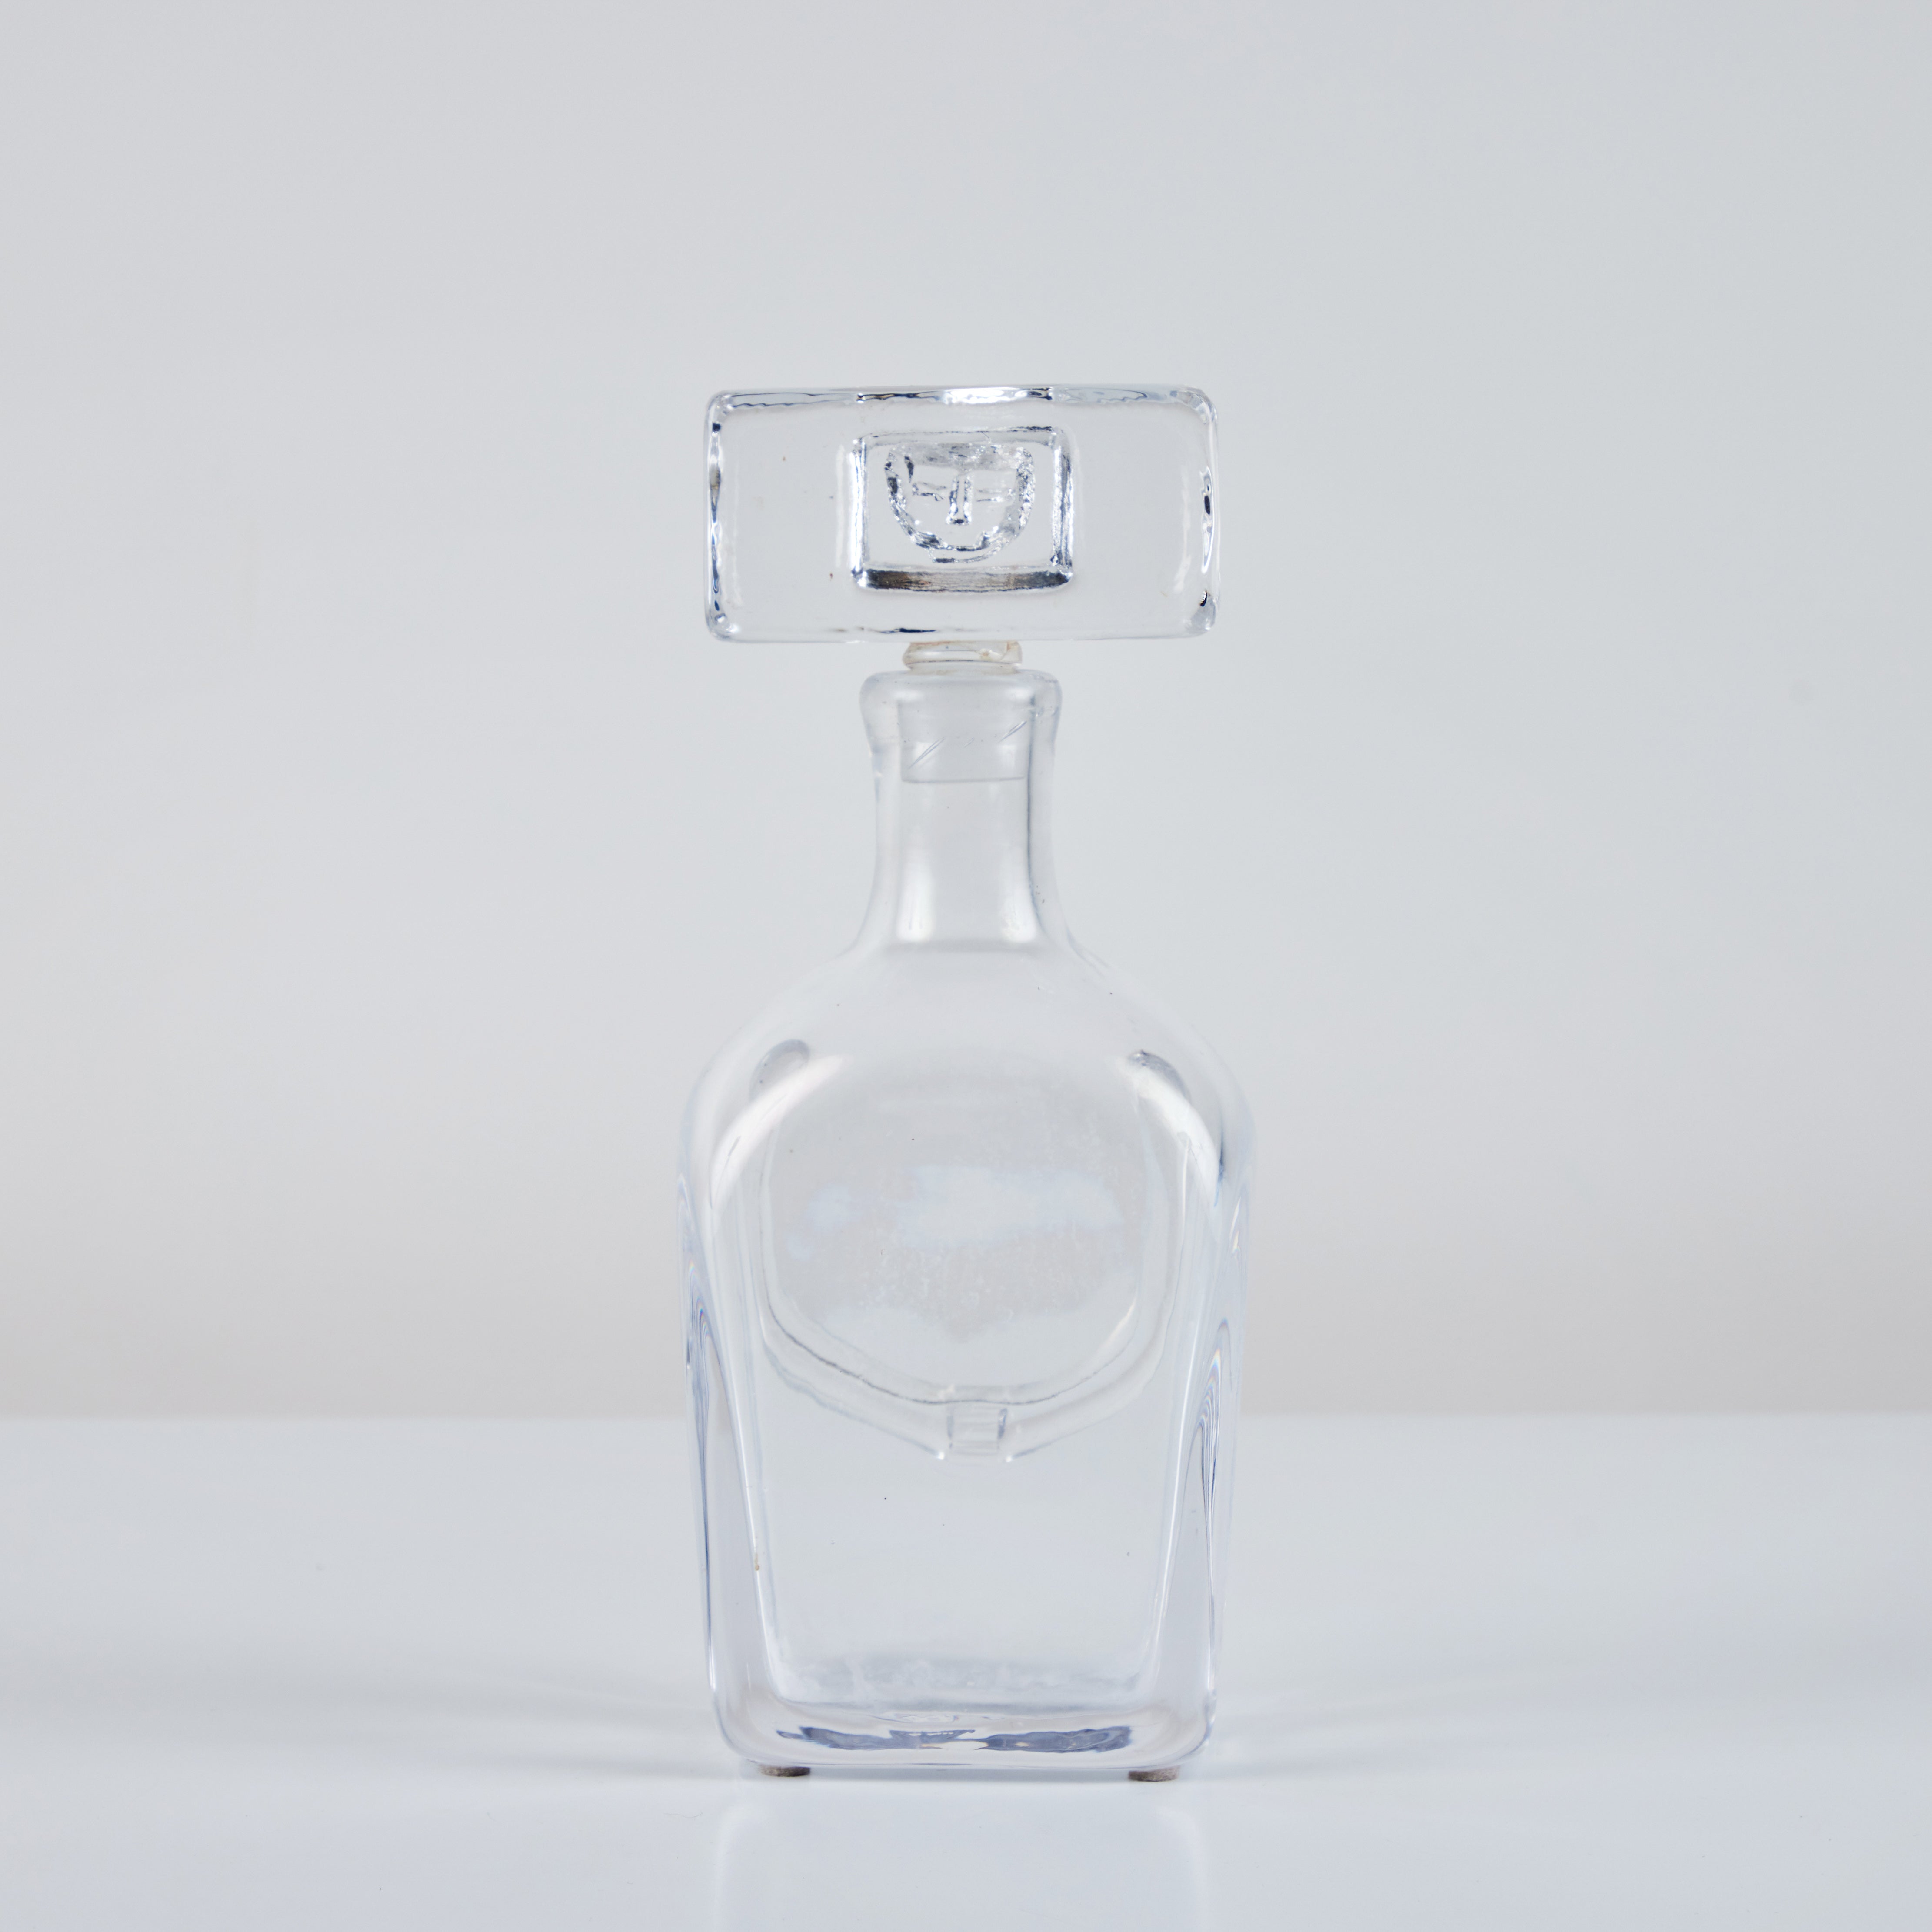 Houston grey glass decanter / An Artful Life